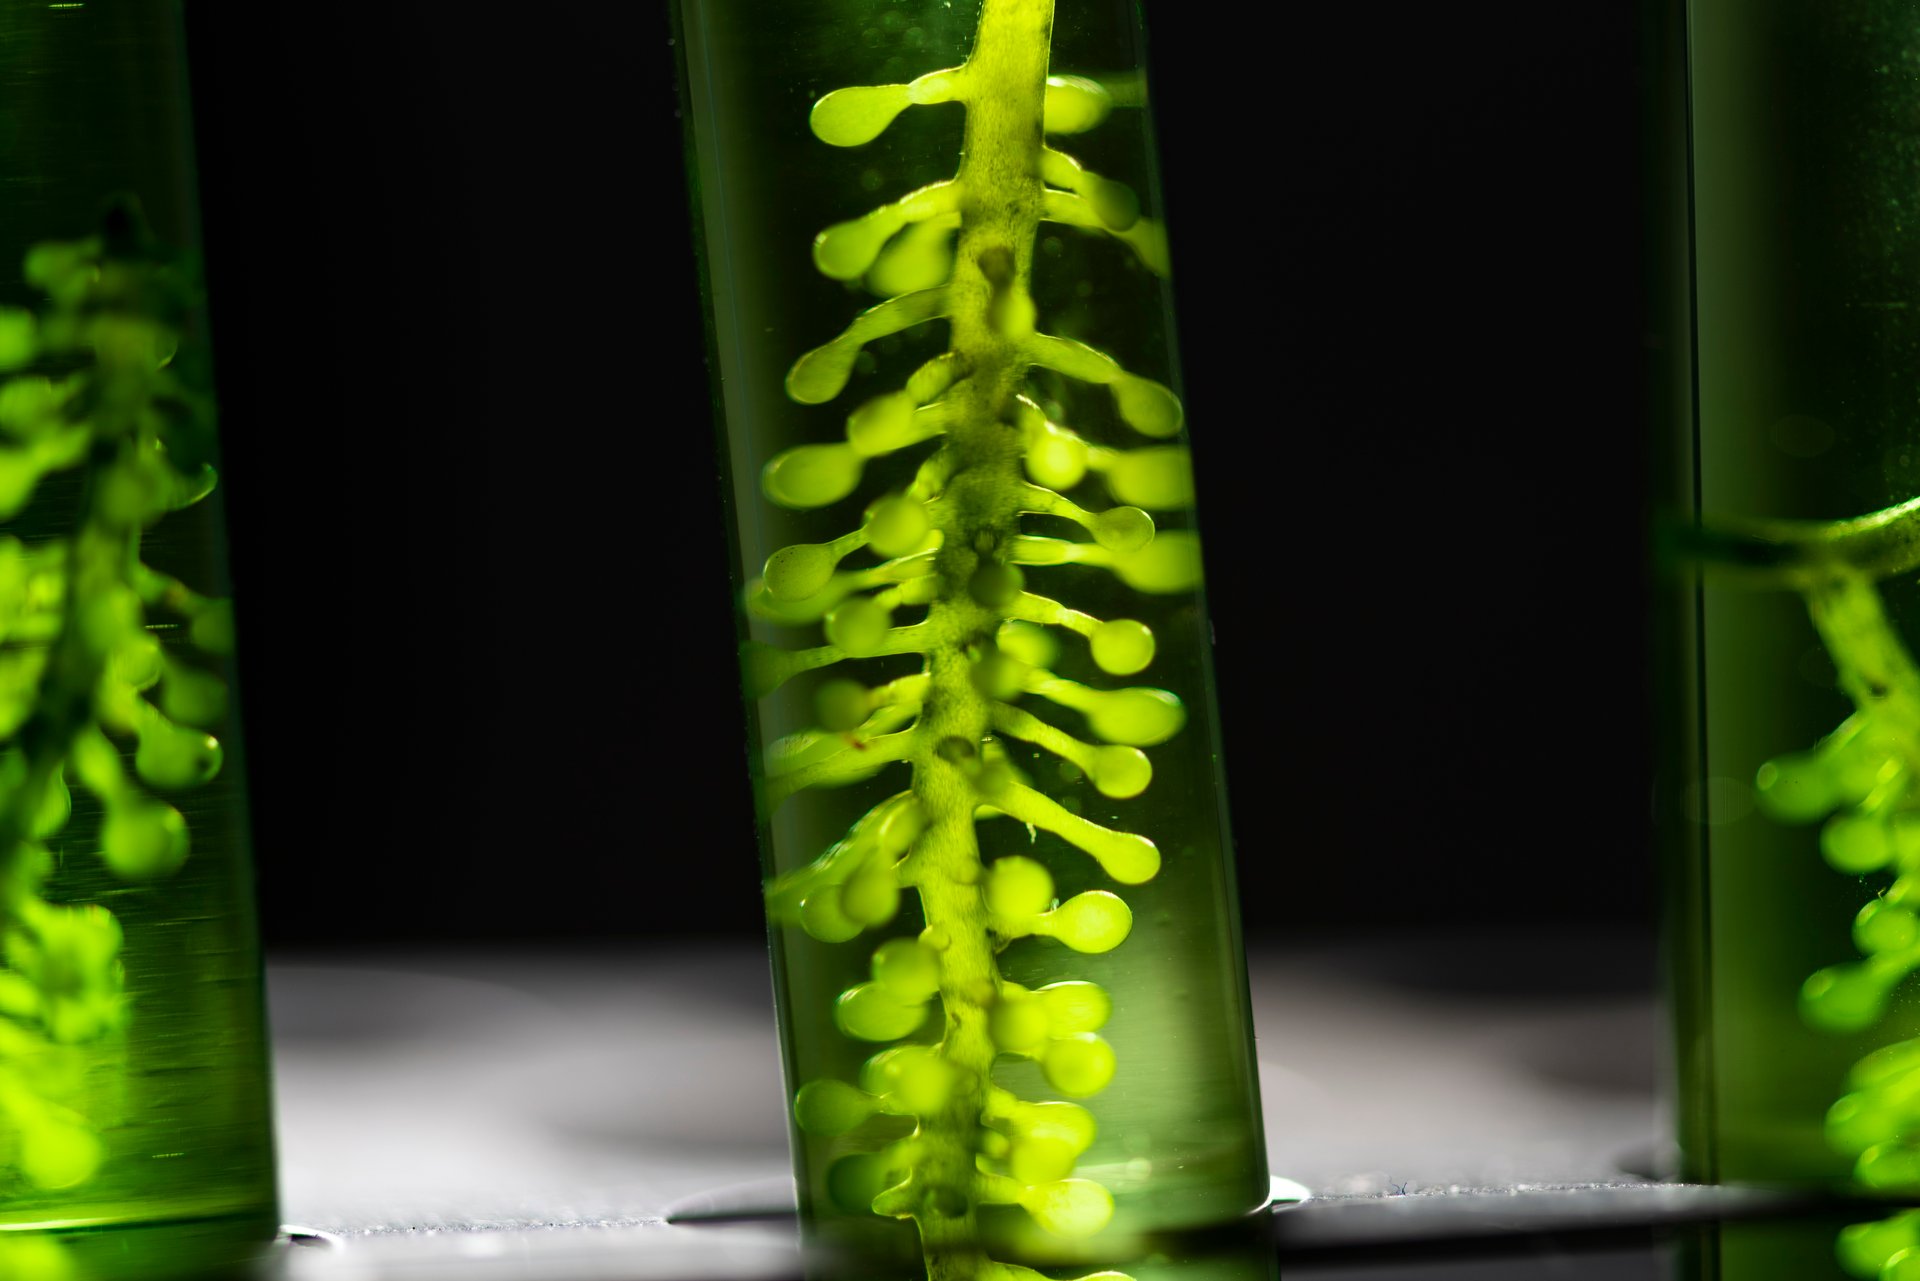 Photobioreactor with green algae inside a glass tube in a laboratory.